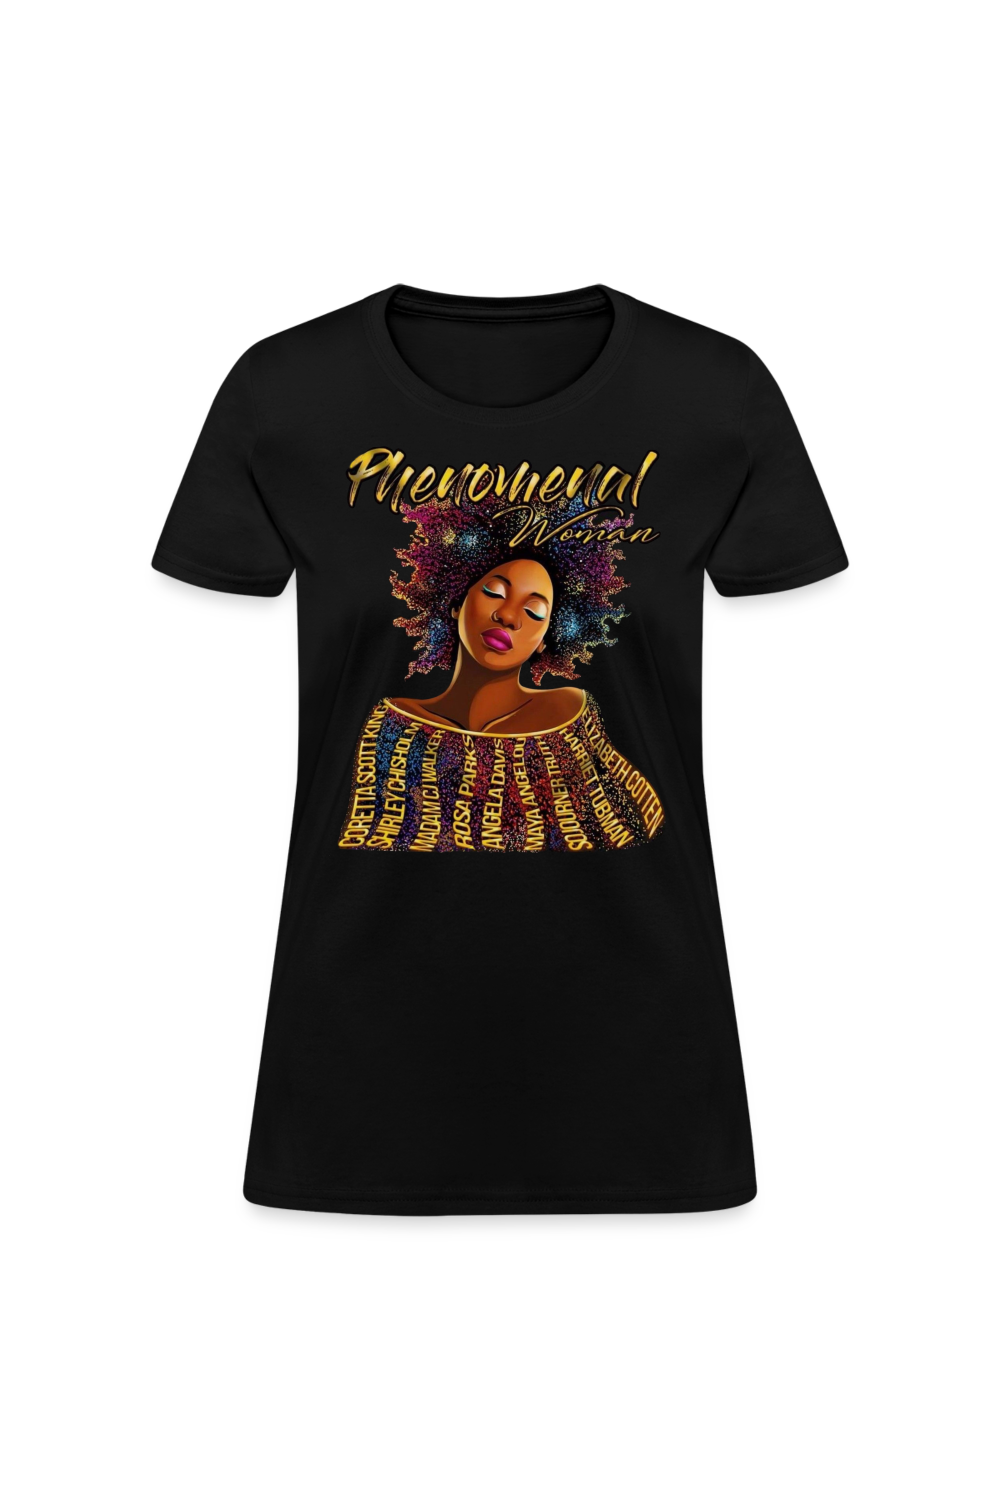 African American Women's Phenomenal Woman Short Sleeve T-Shirt - black